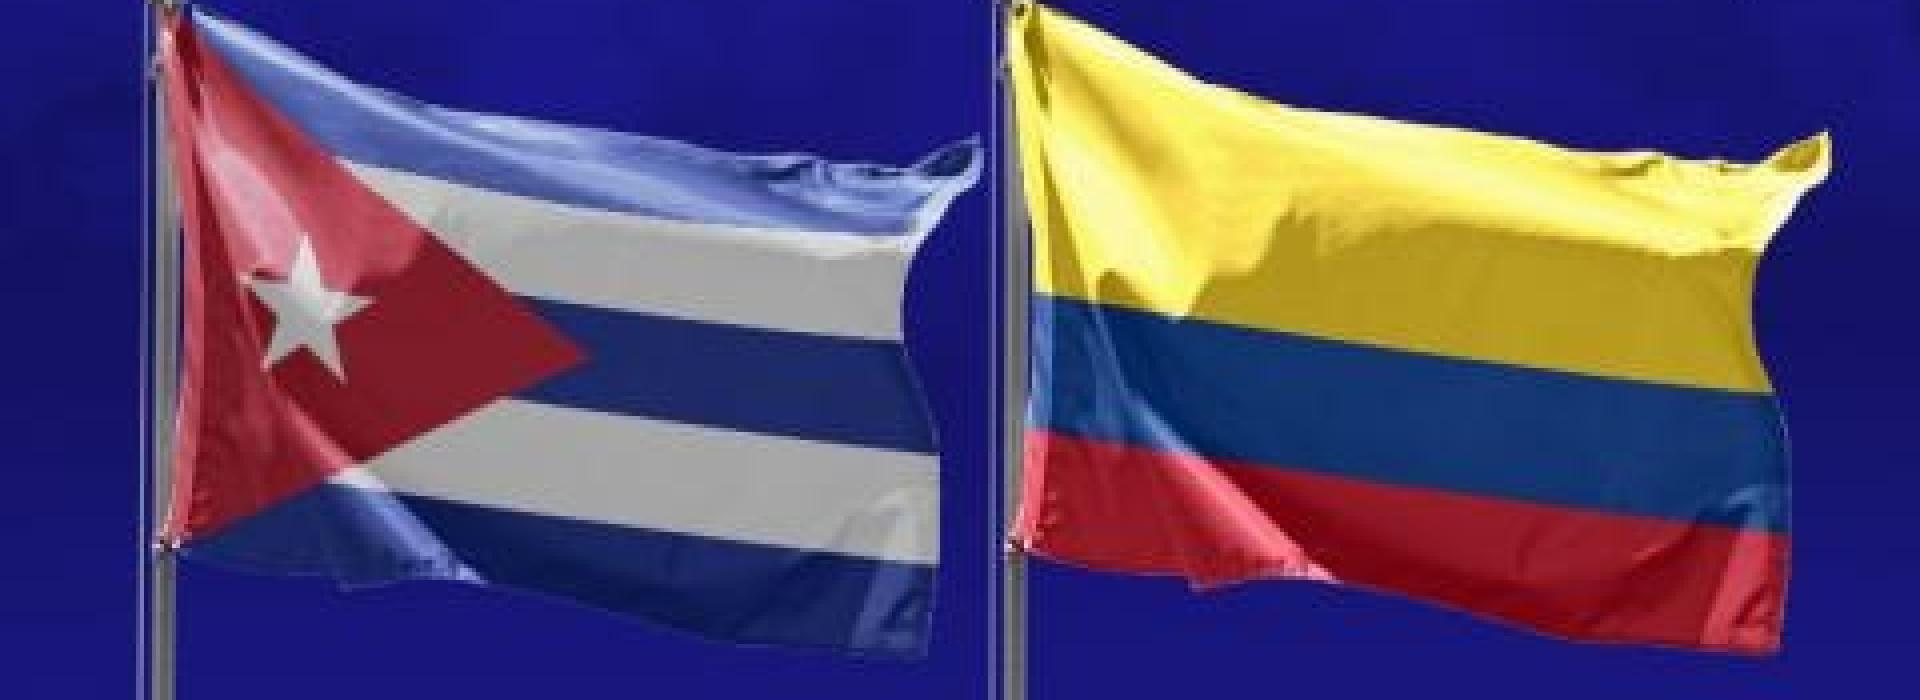 Cuba Colombia